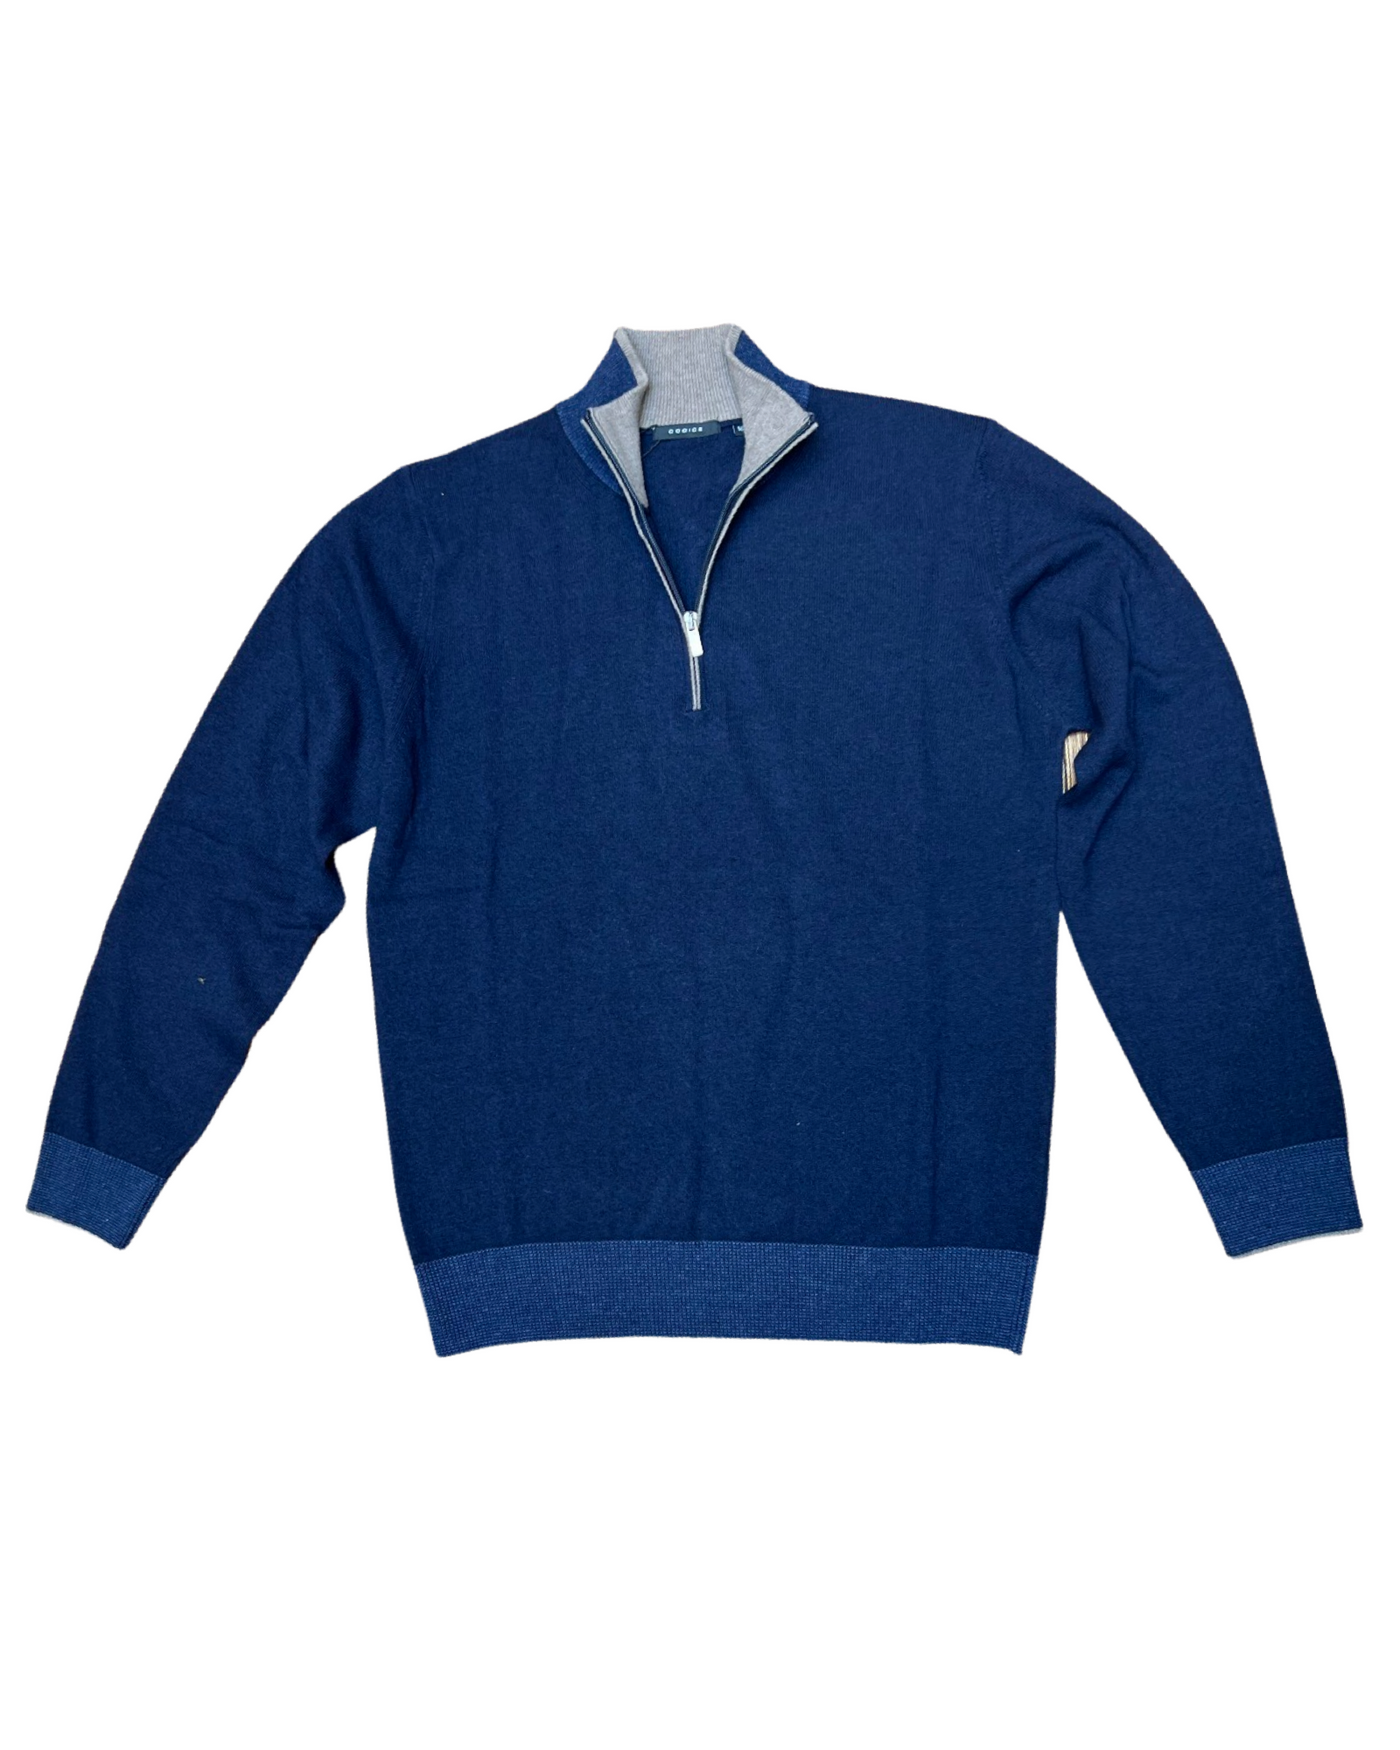 CODICE Zip Mock Neck Blue Sweater